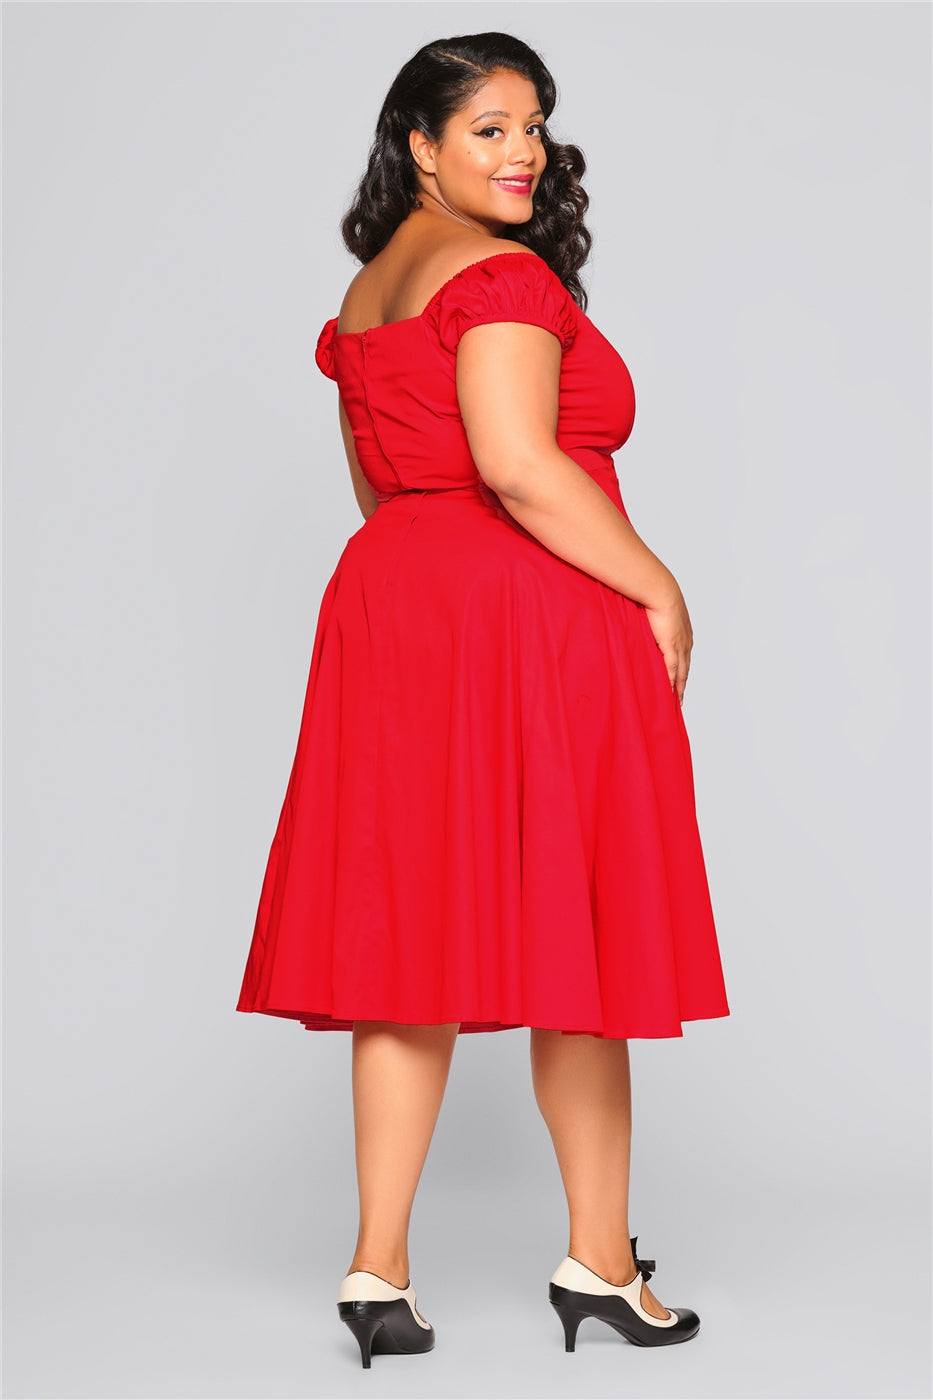 Brunette model smiling, looking over her shoulder wearing a red mid length dress and high heels